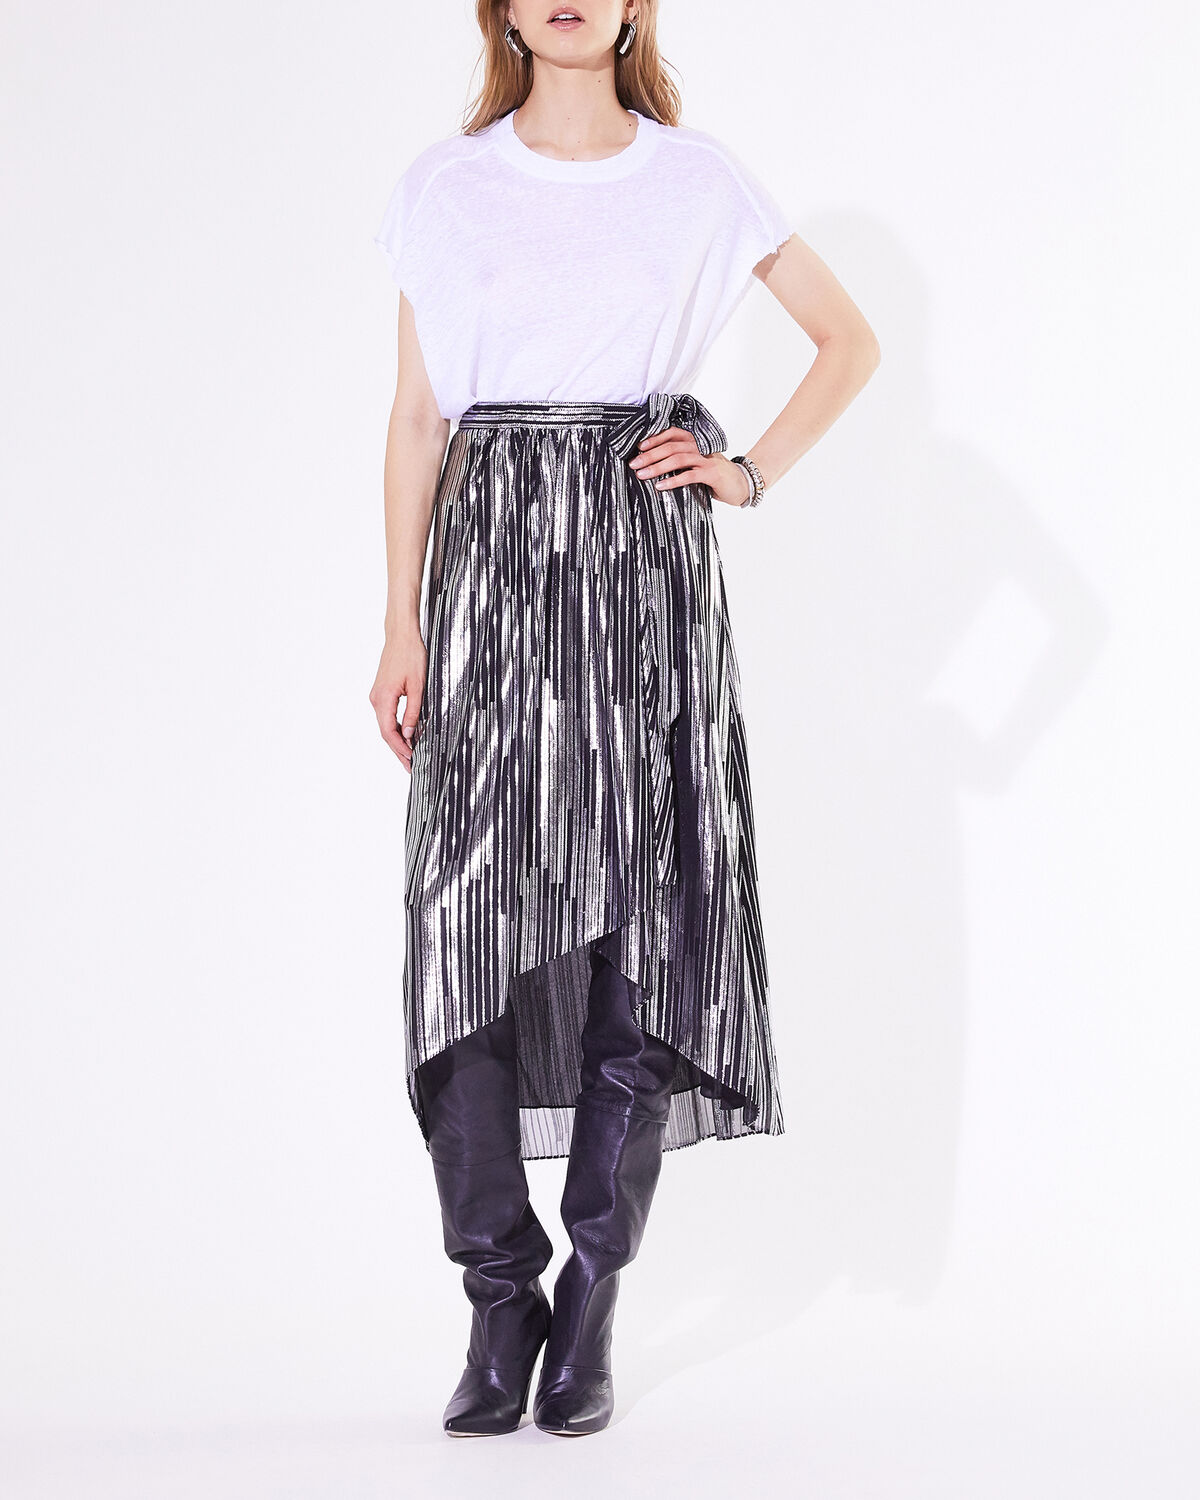 Dorie Skirt Black And Silver by IRO Paris